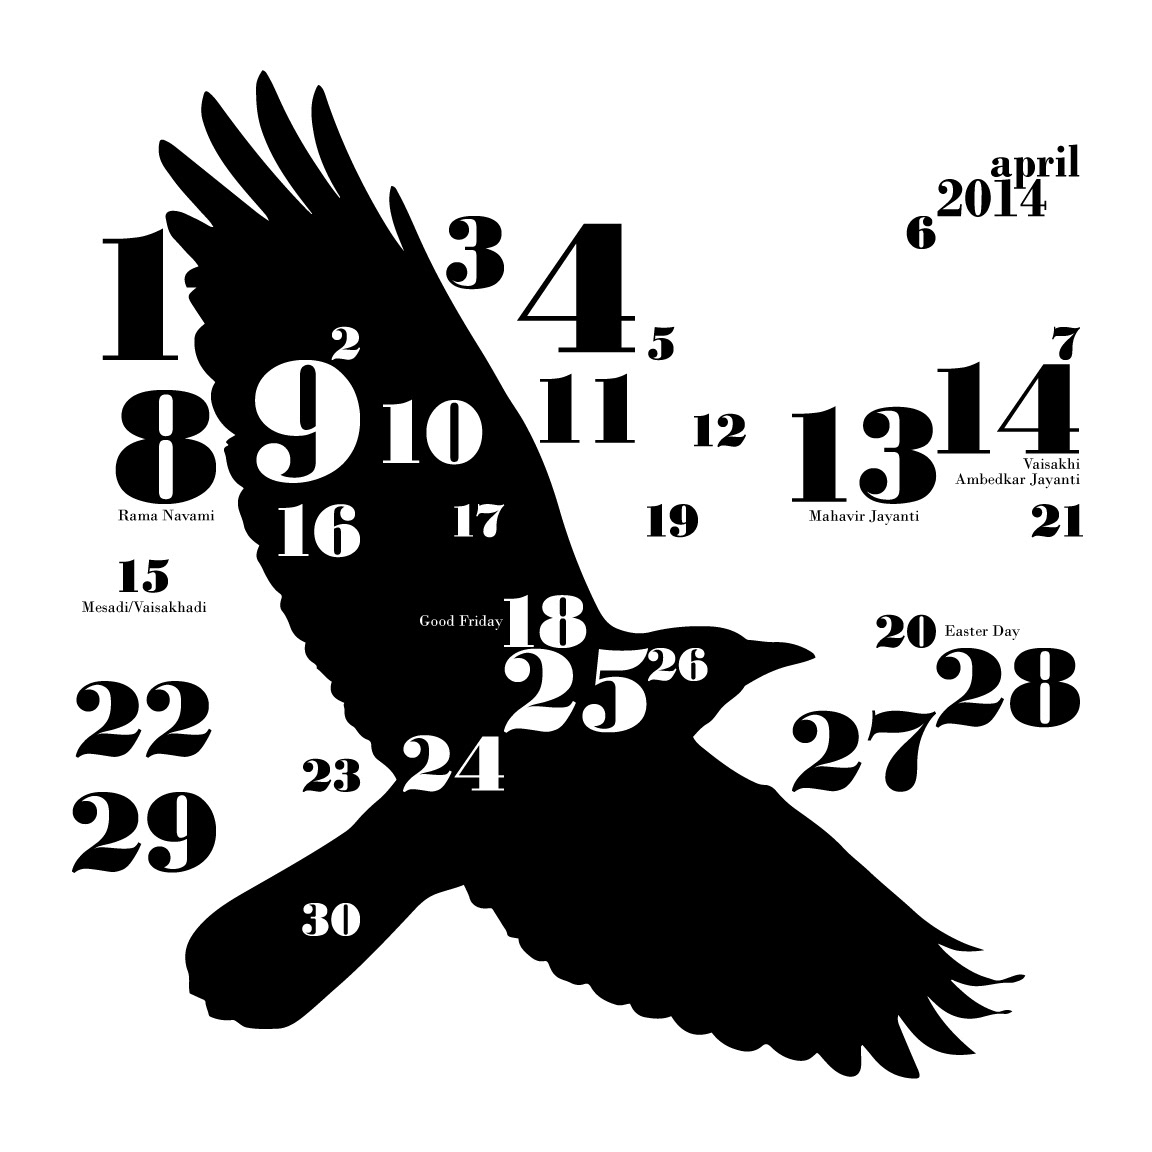 Calendar 2014 calendar design Indian Calendar moon moon calendar typo calendar crow crow 2014 crow calendar